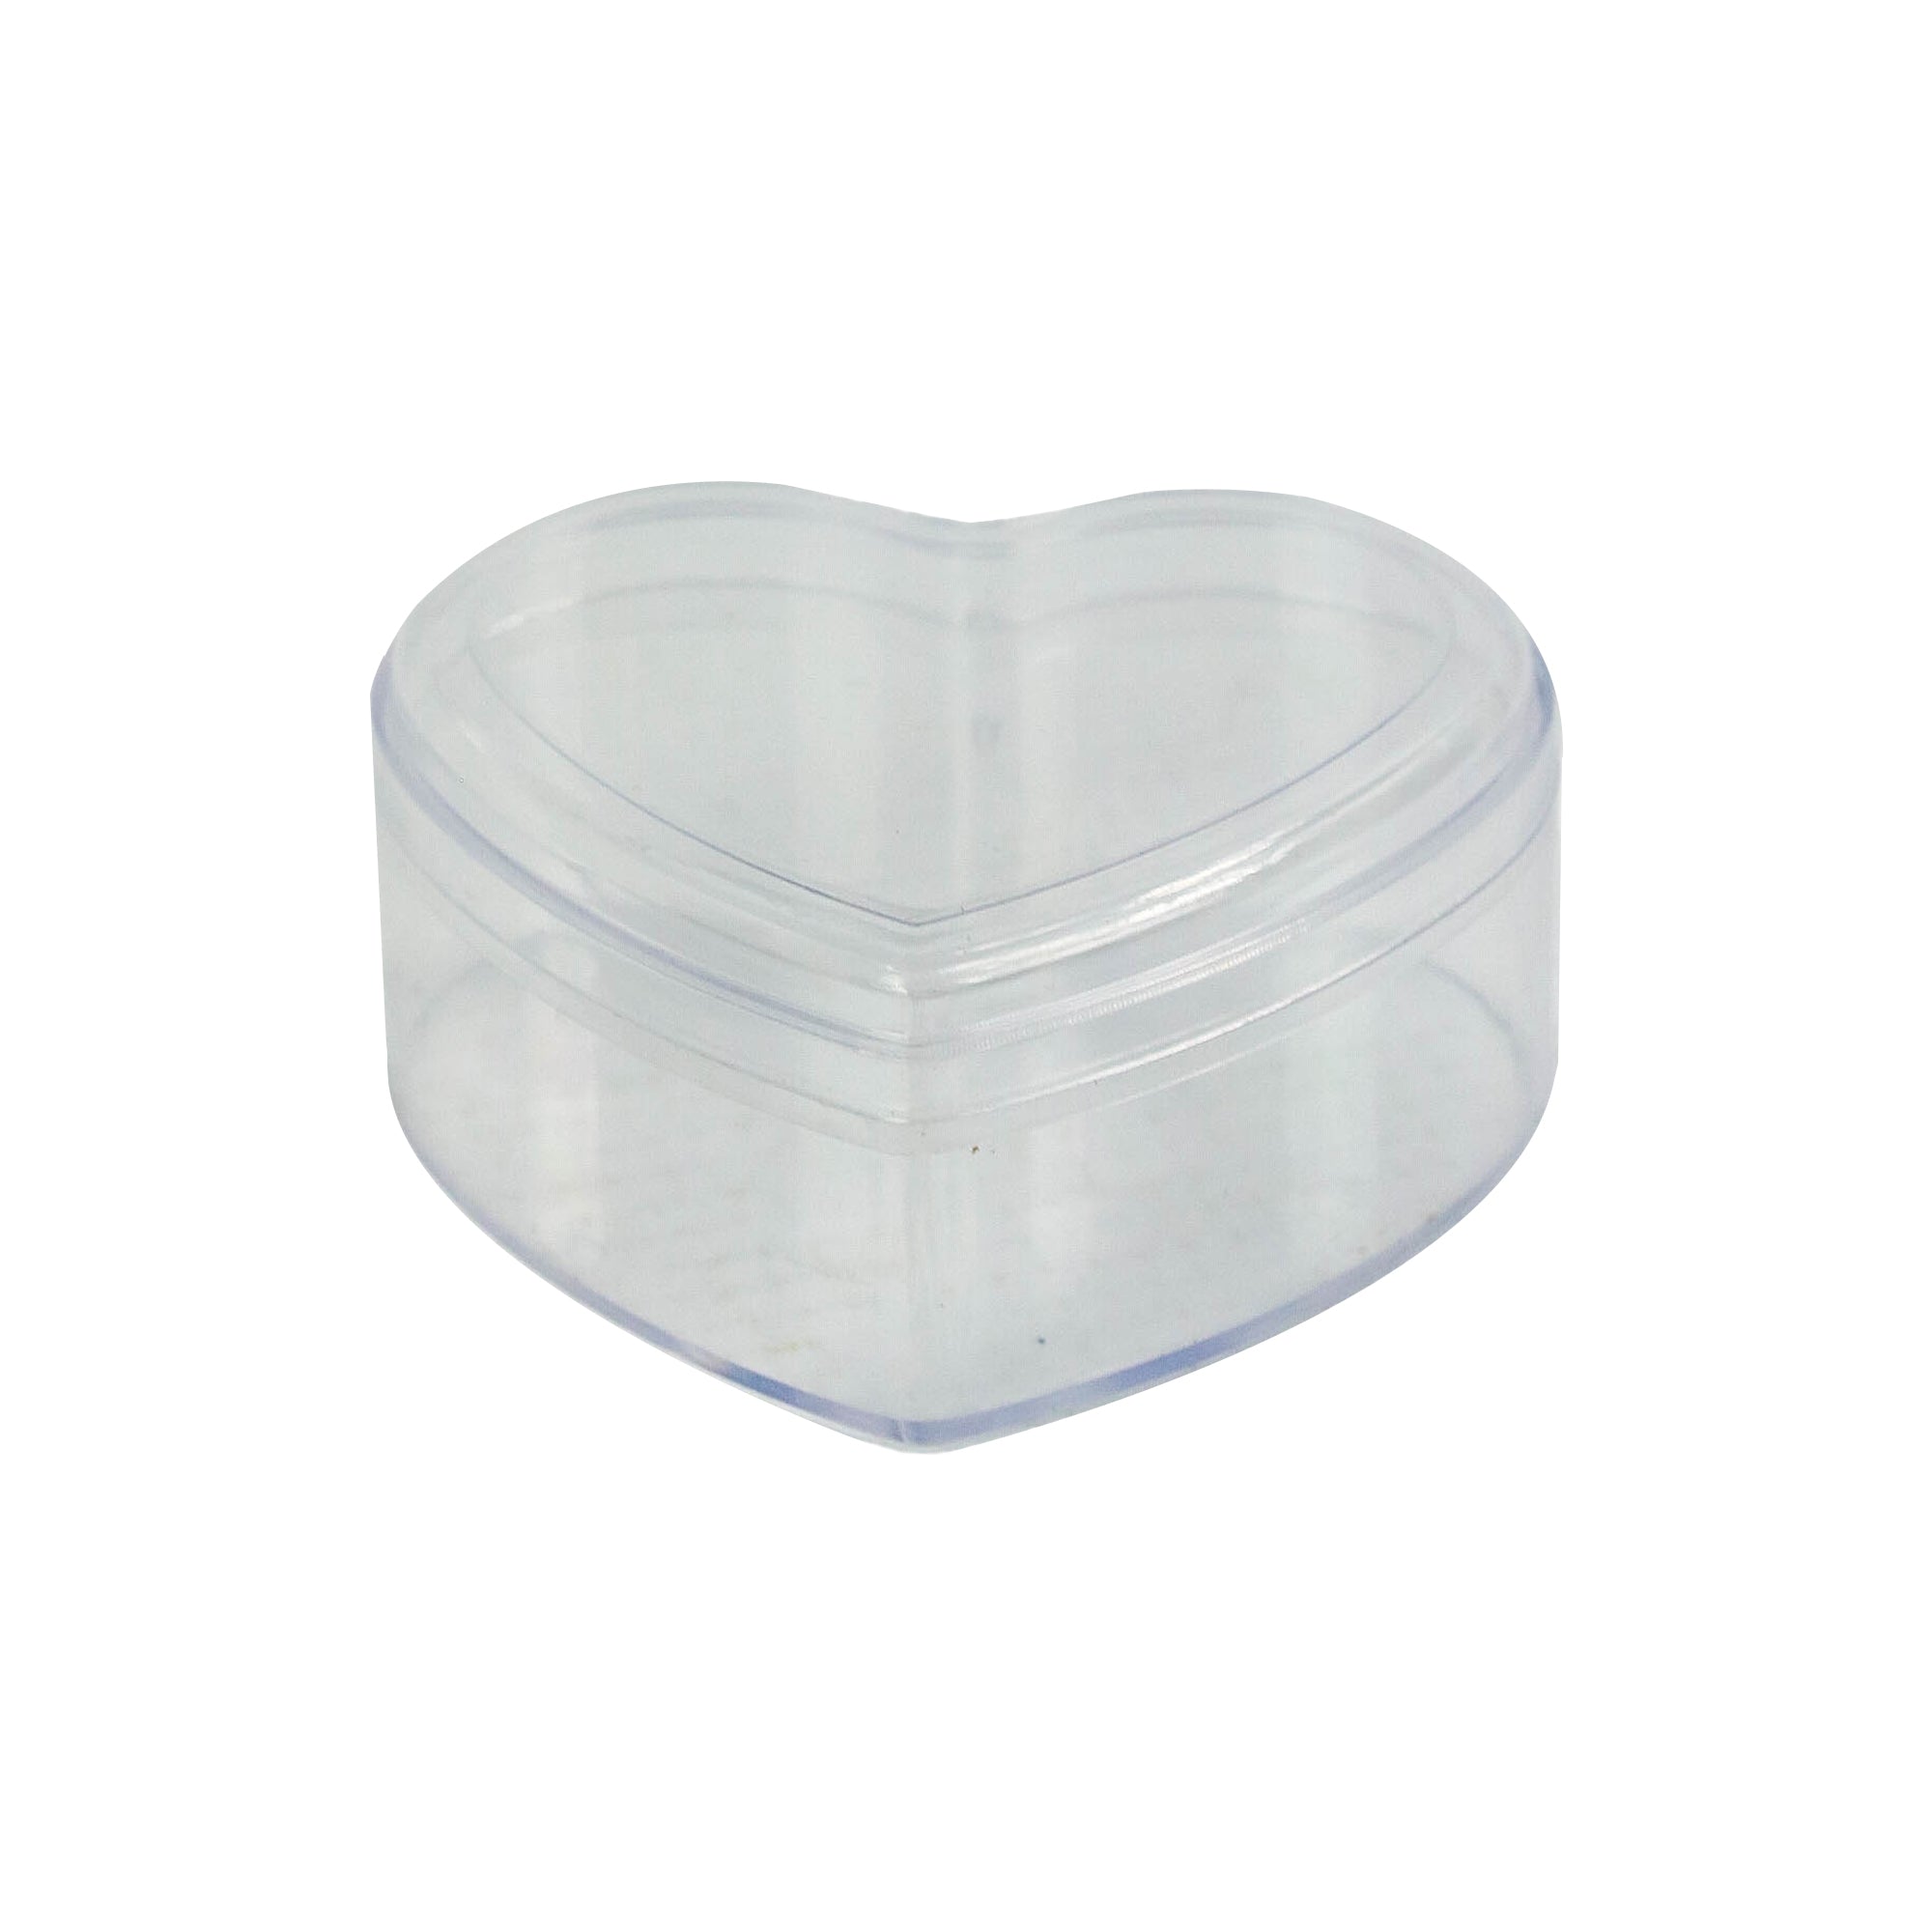 Gift Box Plastic Acrylic Box Heart Shape with Lid 6.5x3cm